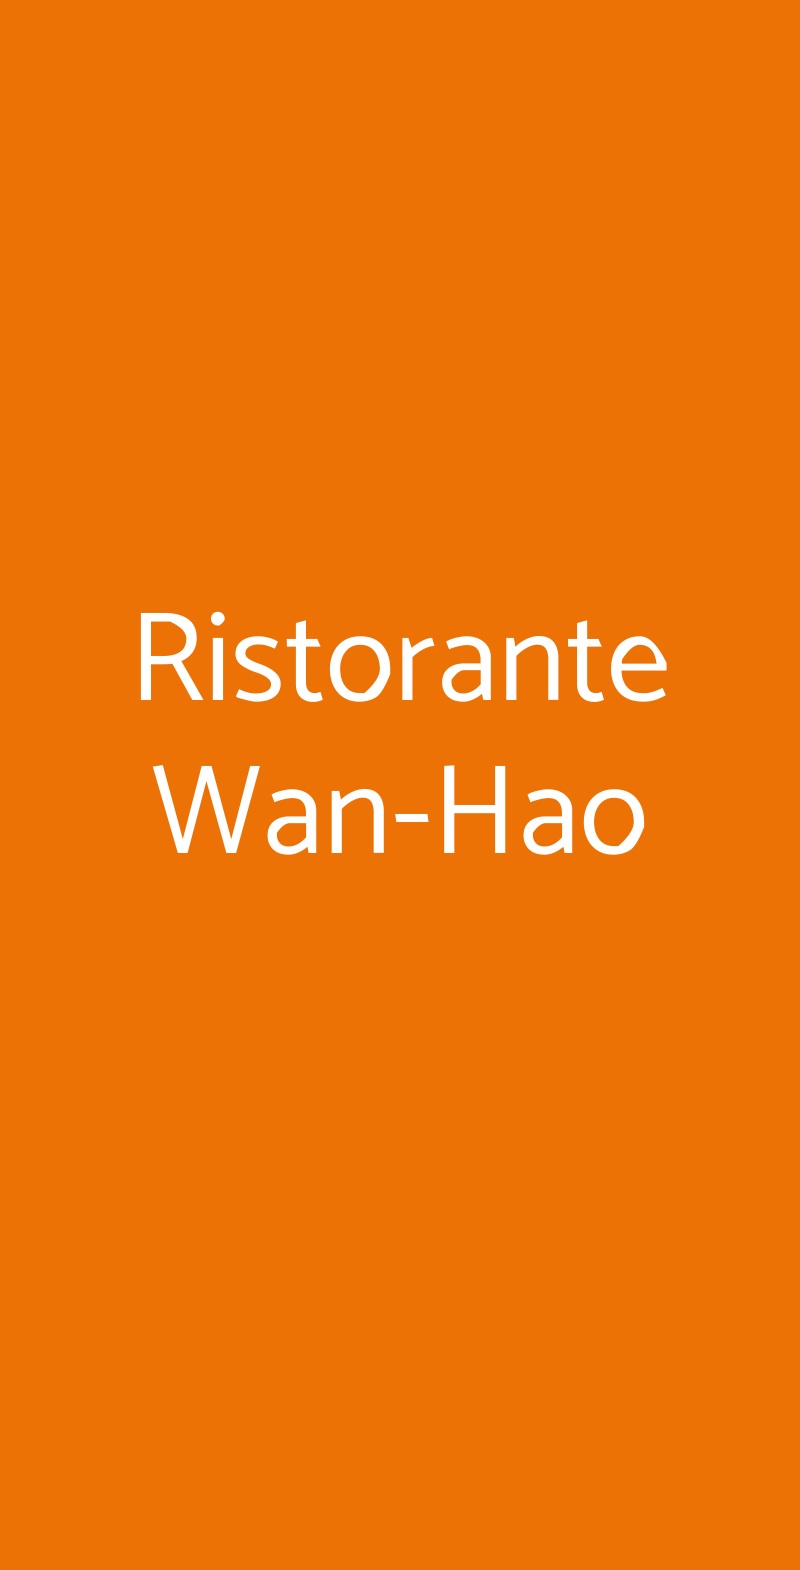 Ristorante Wan-Hao Milano menù 1 pagina